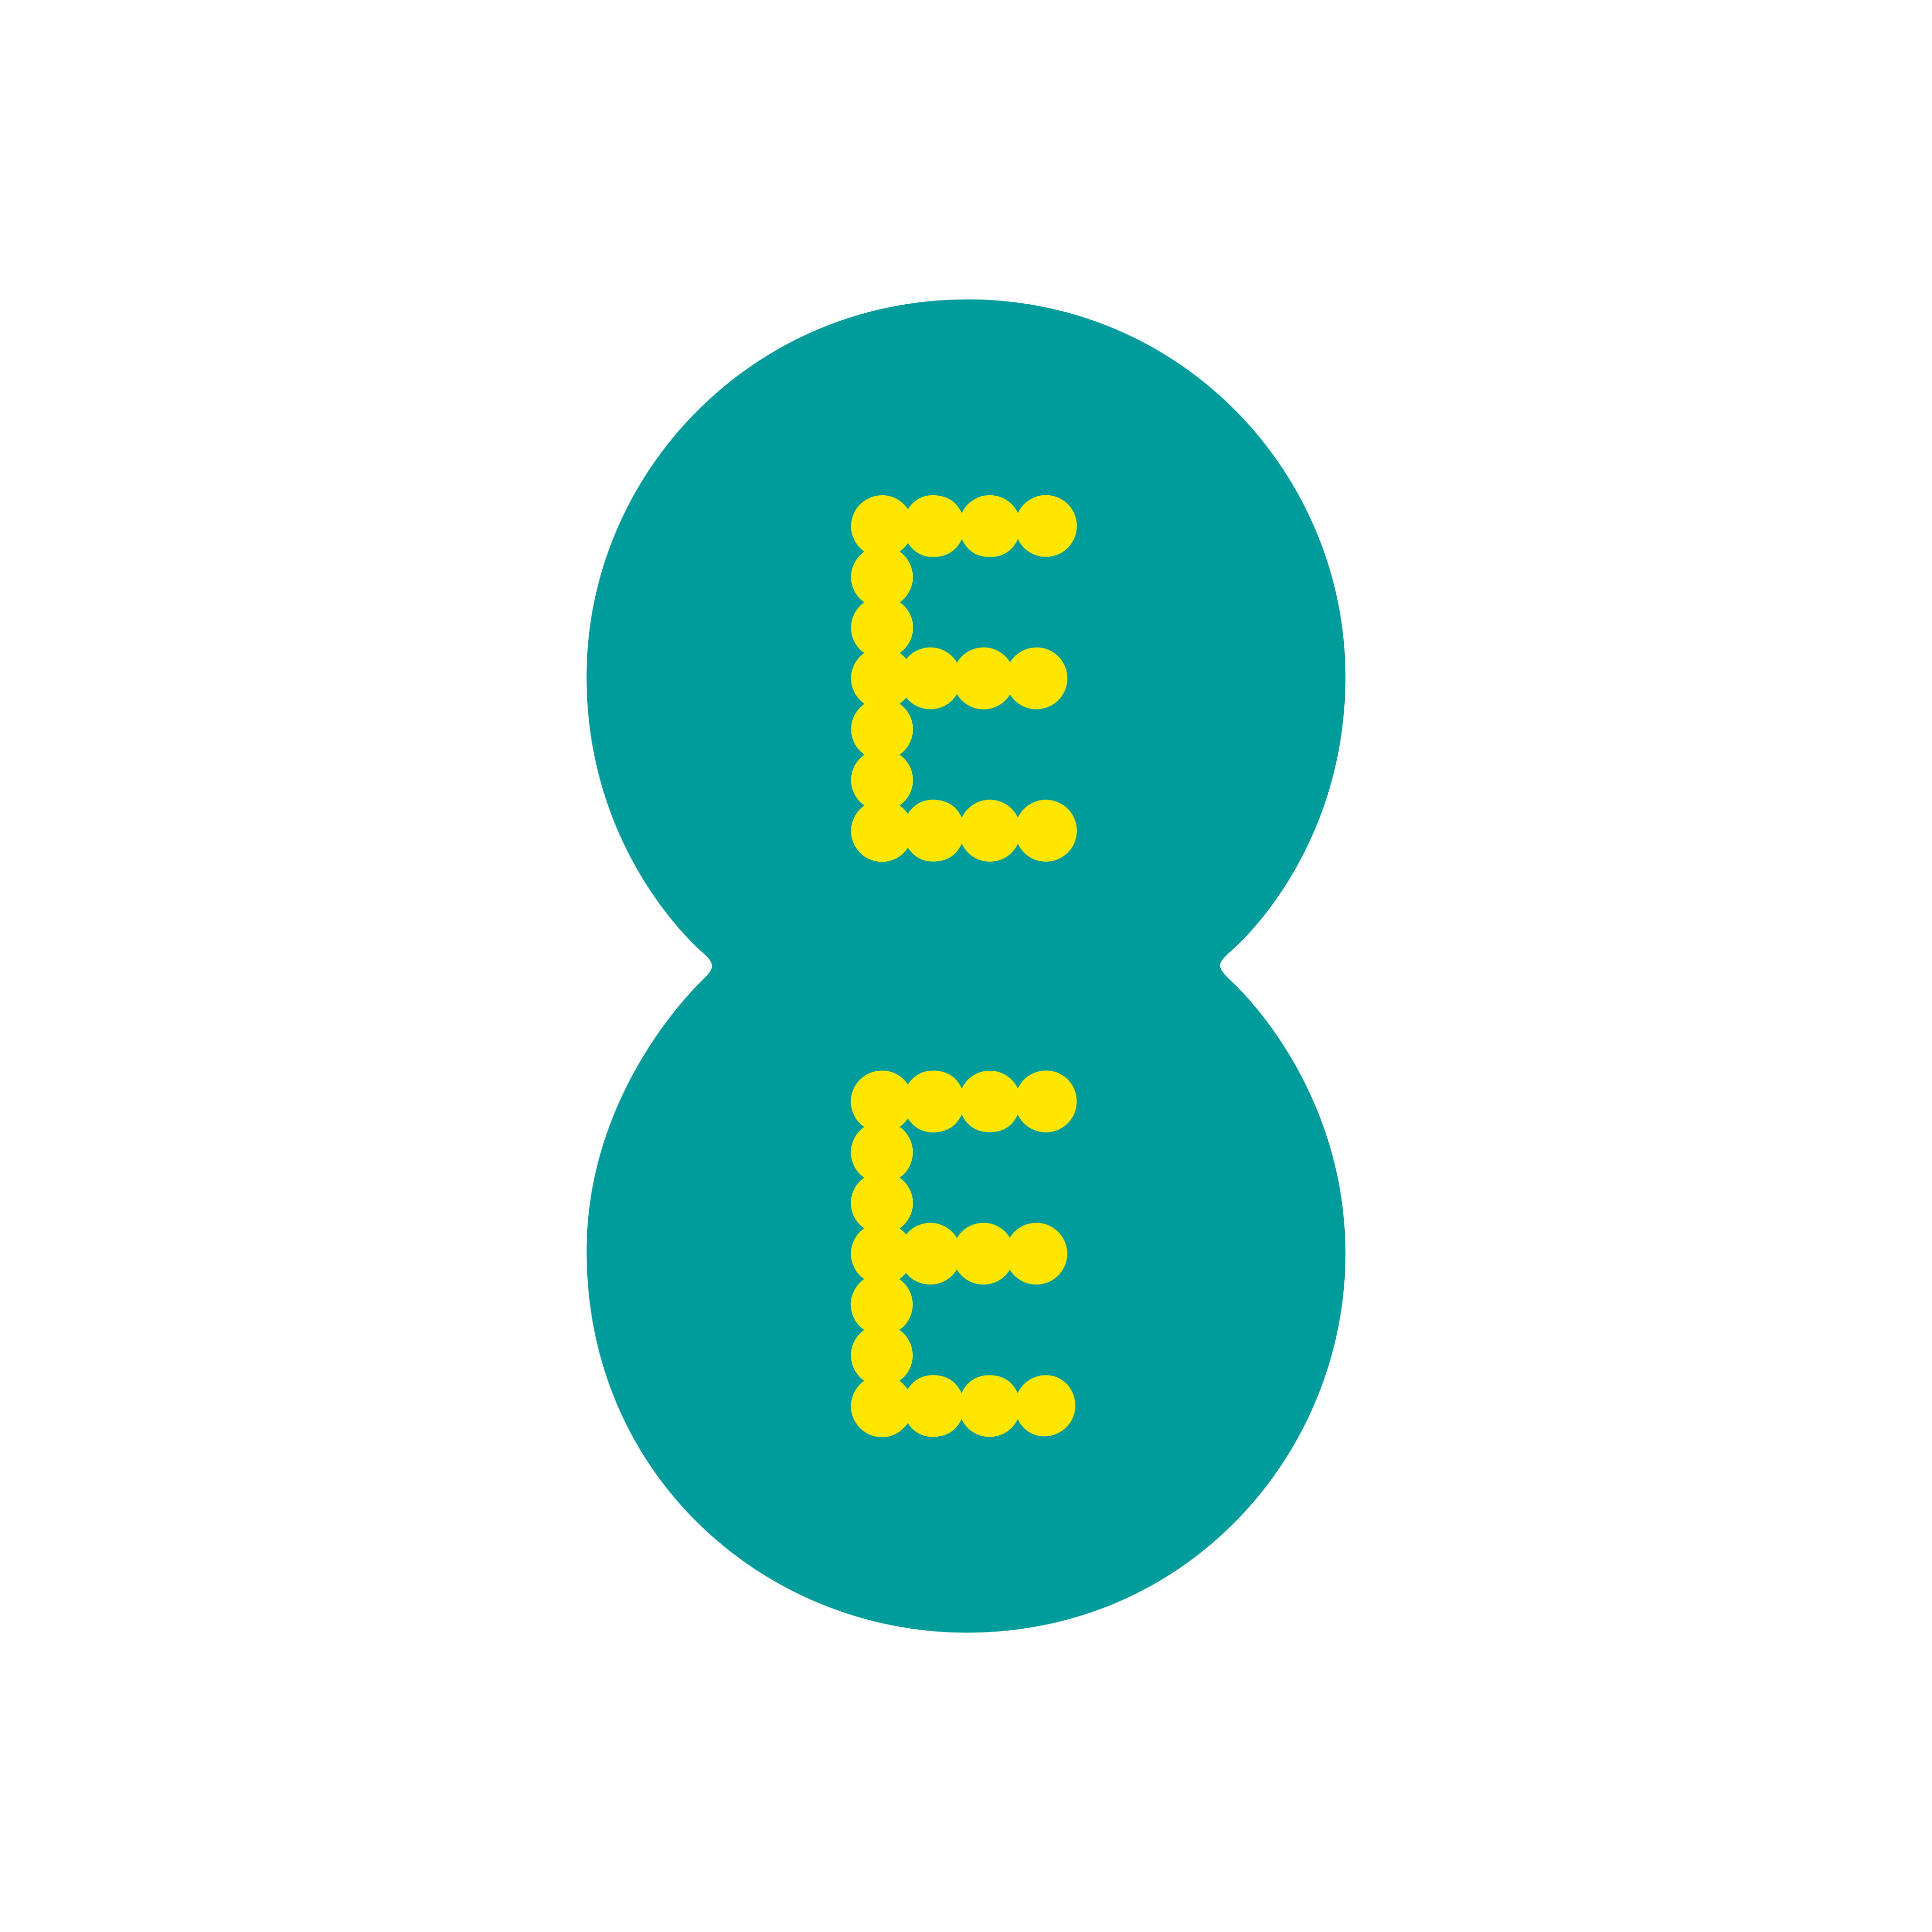 ee logo 0 - EE Logo - Everything Everywhere Logo